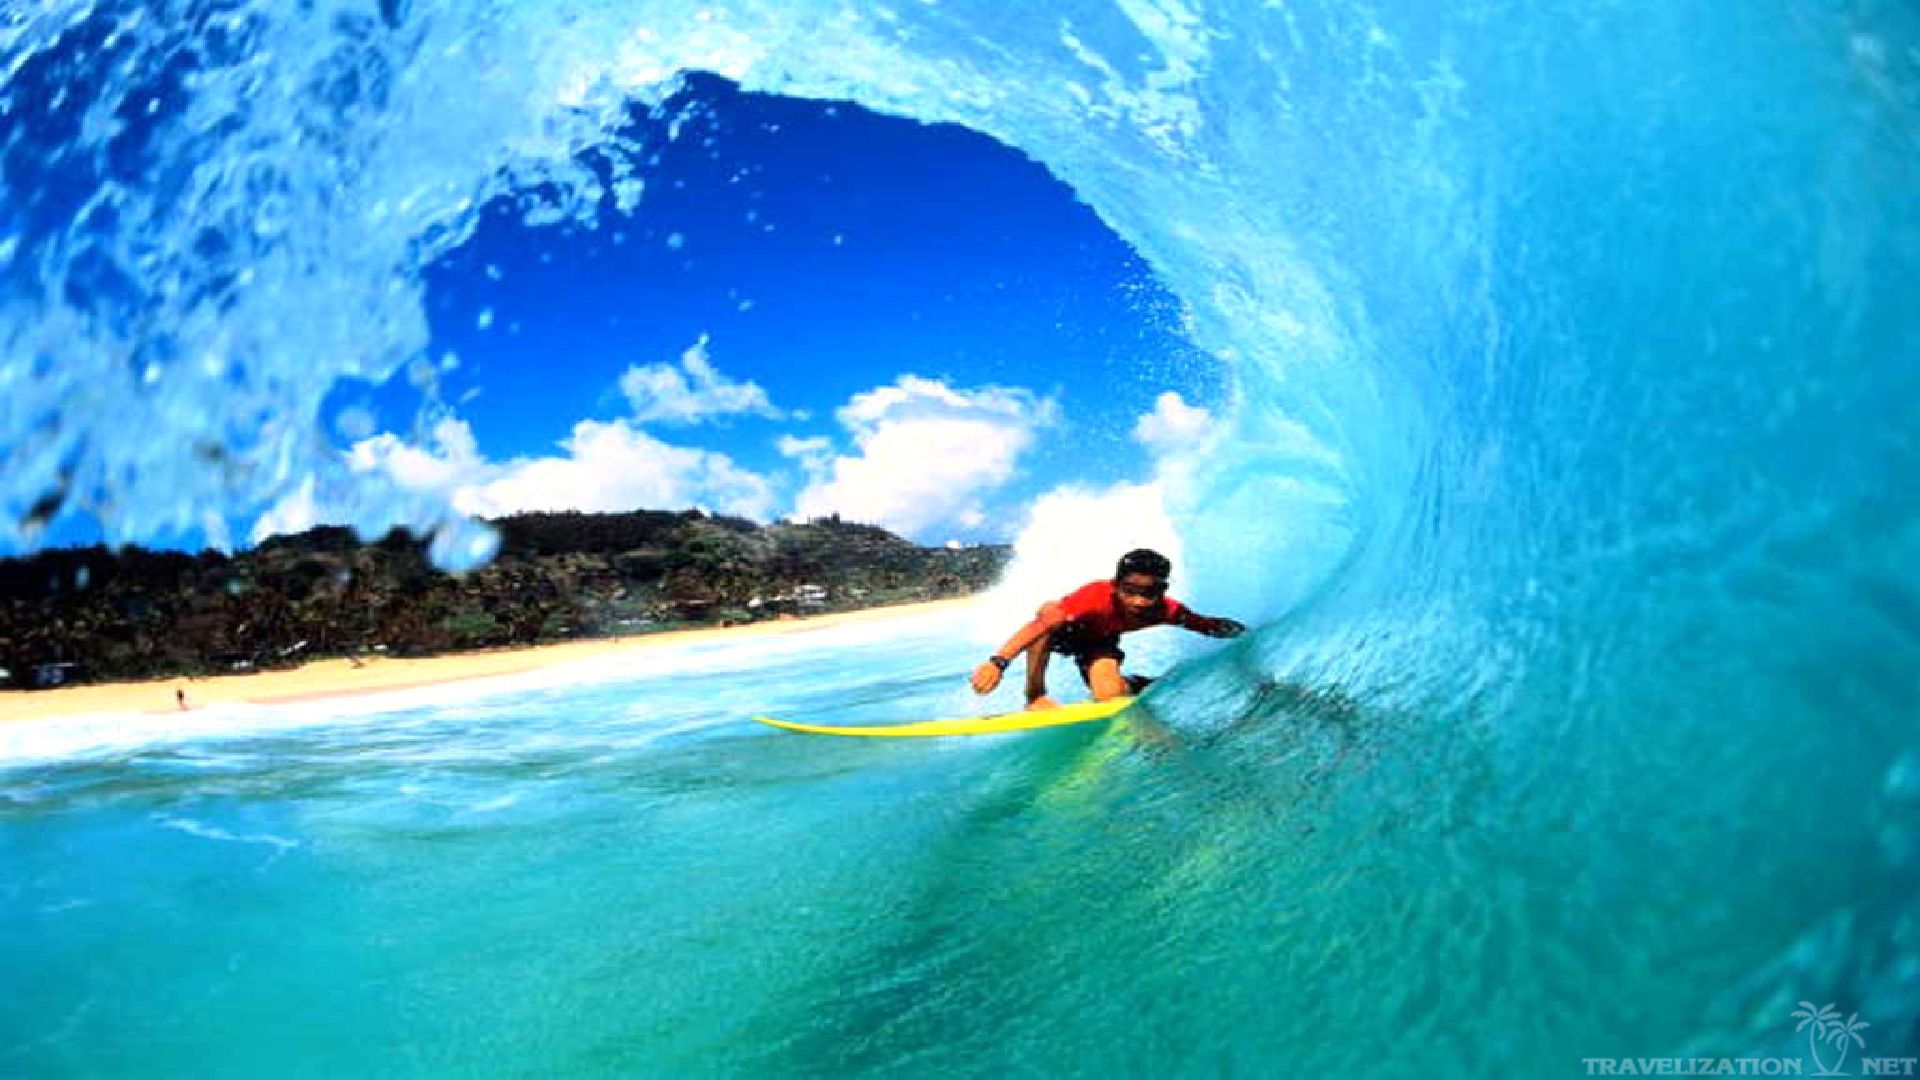 HD Surfing in Big Wave Wallpaper HD 1080p - HiReWallpapers 7583